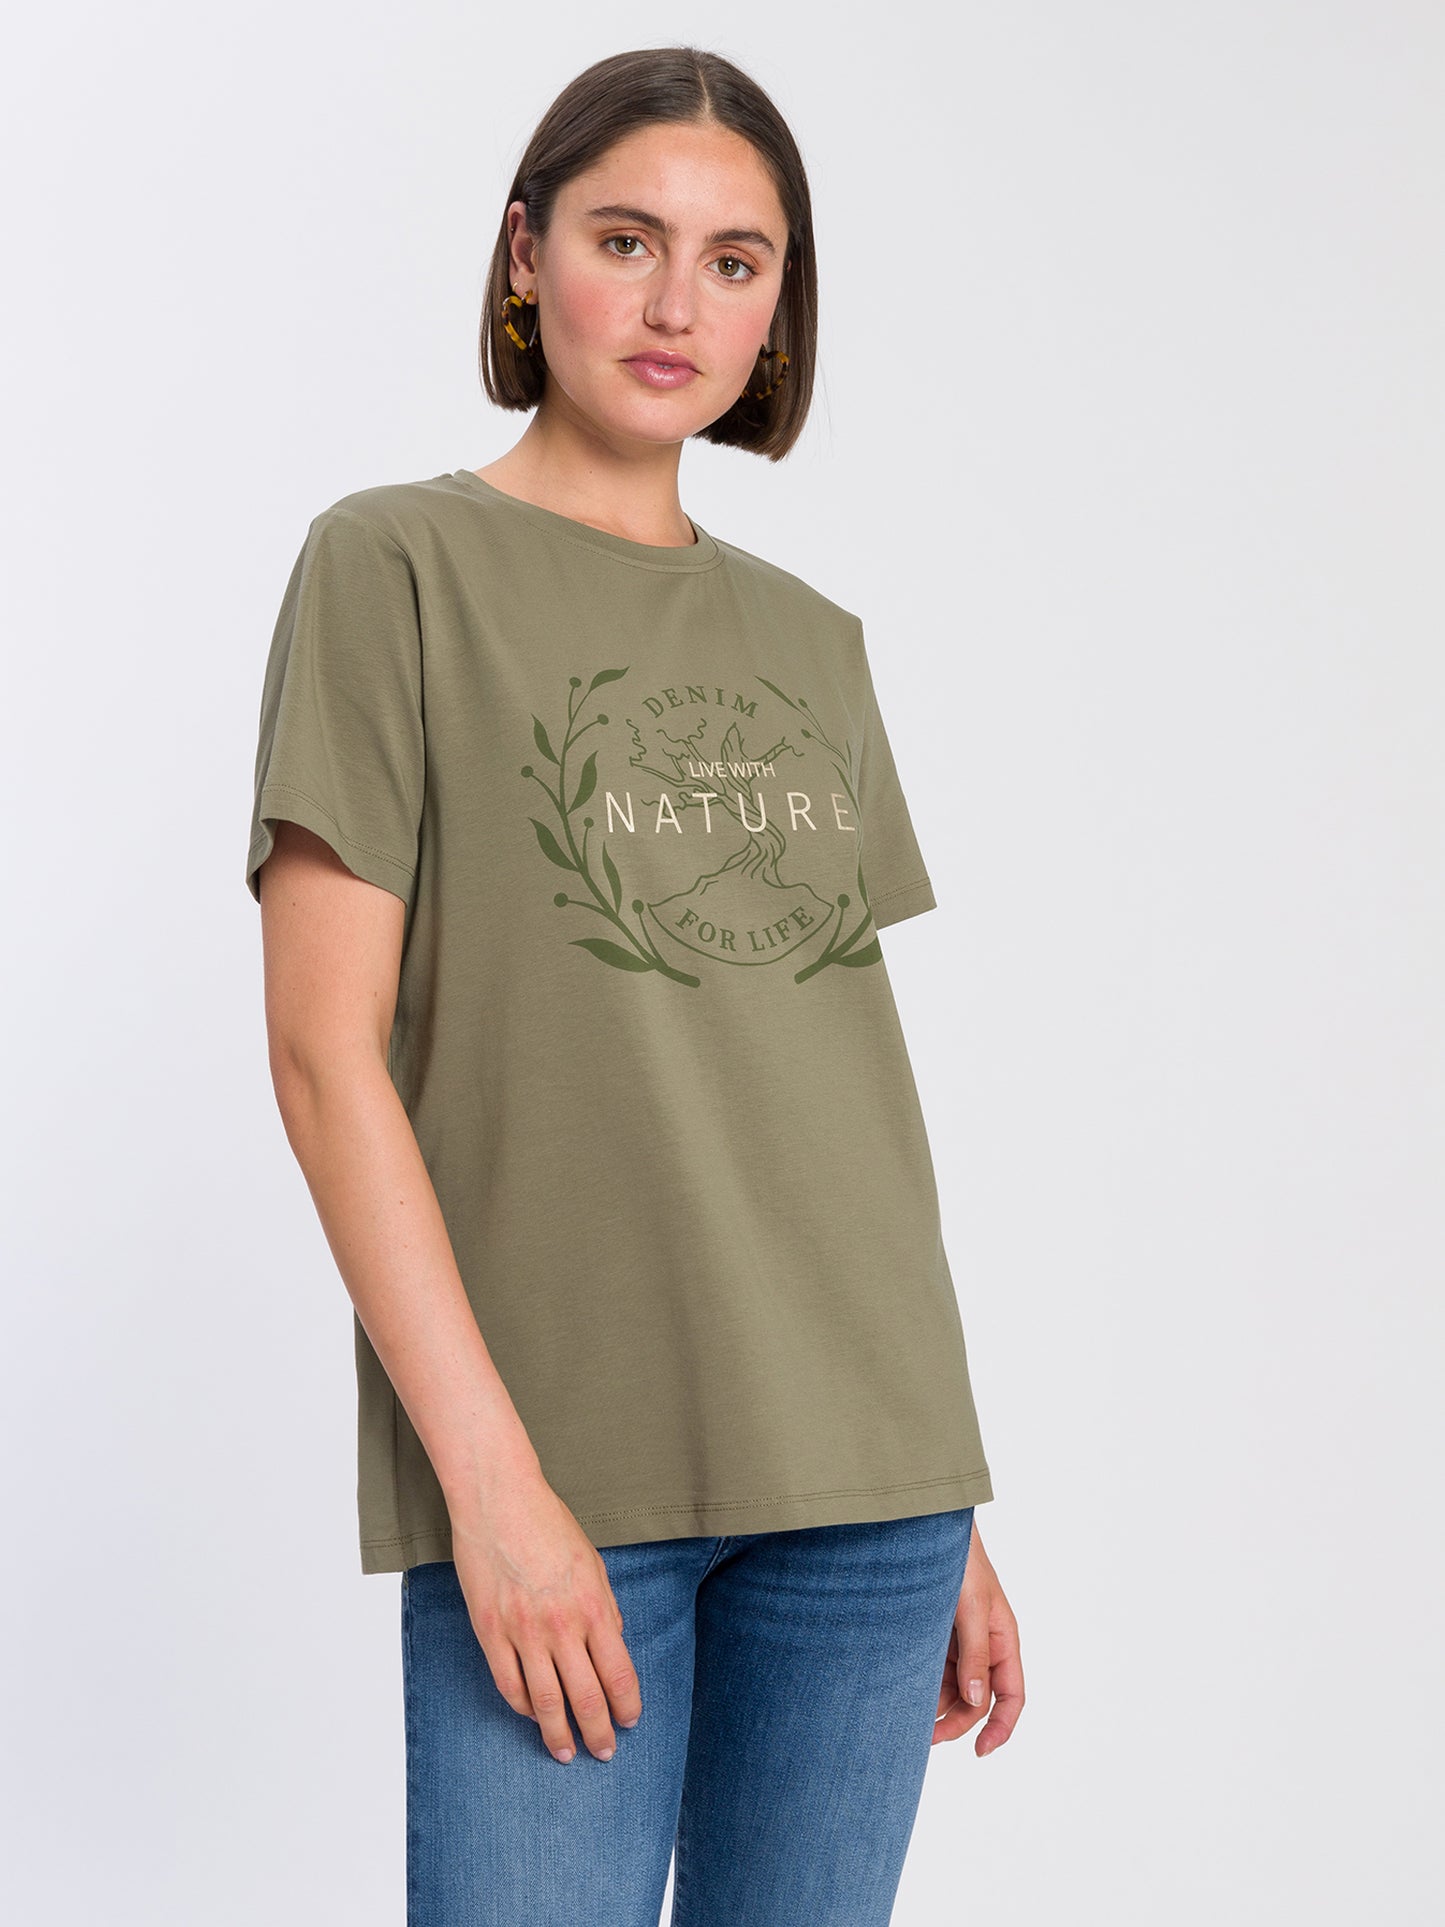 Women's regular print T-shirt Live with Nature green